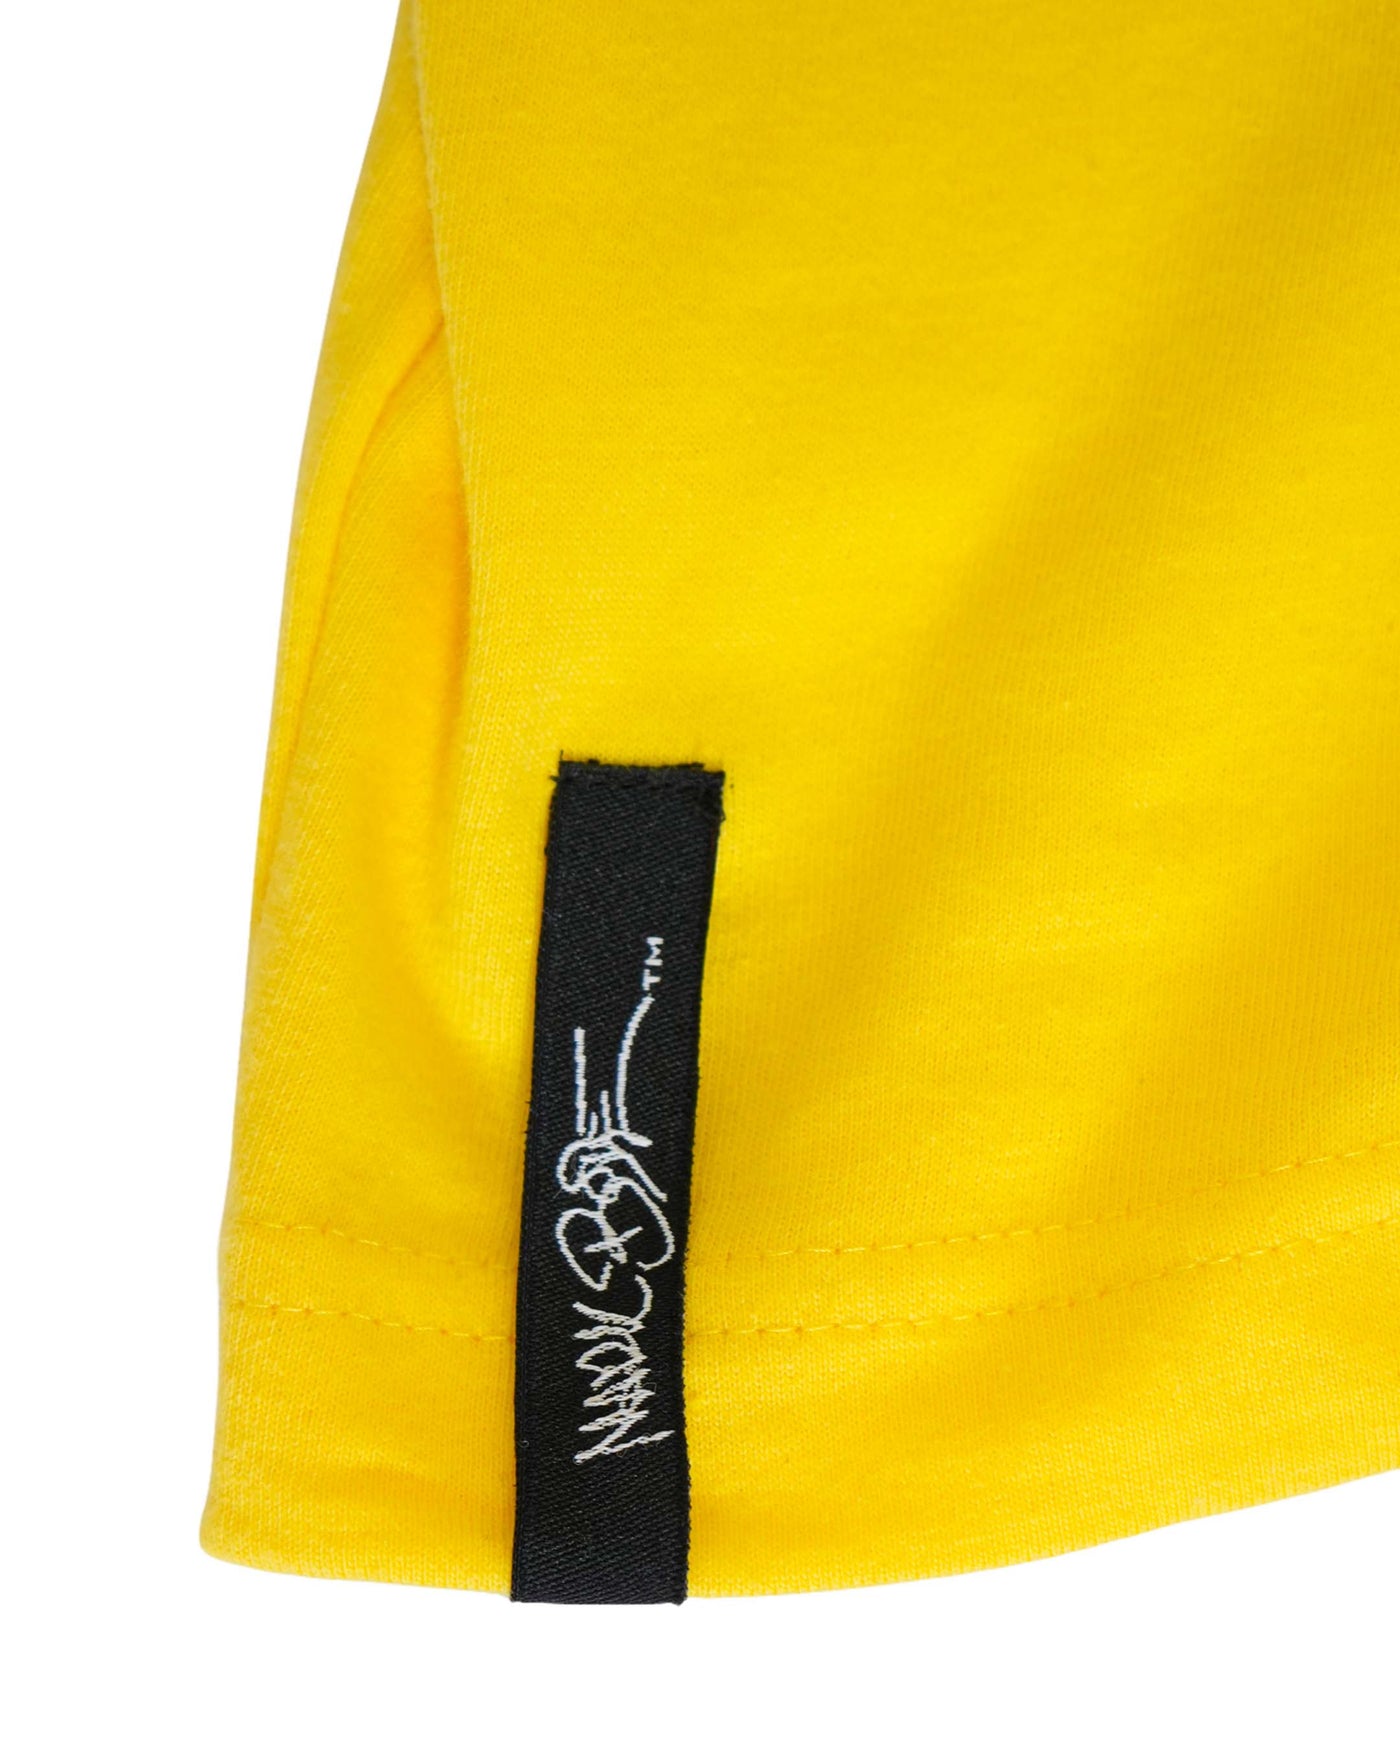 Mark Bodē Blazing Grams Yellow T-Shirt